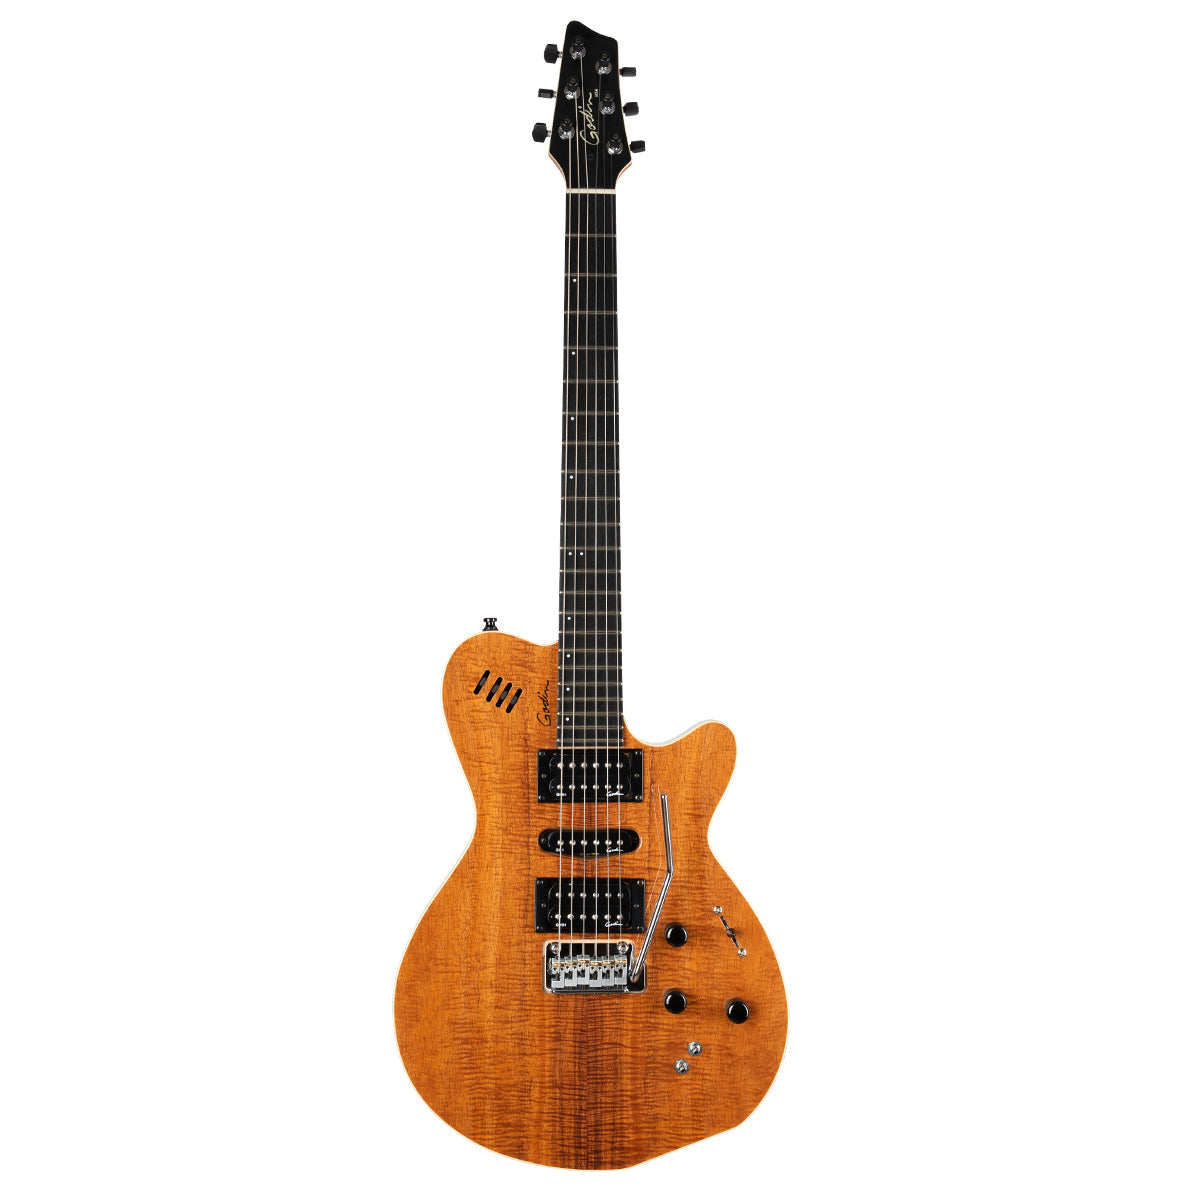 Godin XTSA 3 Voice Electric Guitar ~ Koa Extreme HG, Electric Guitars for sale at Richards Guitars.